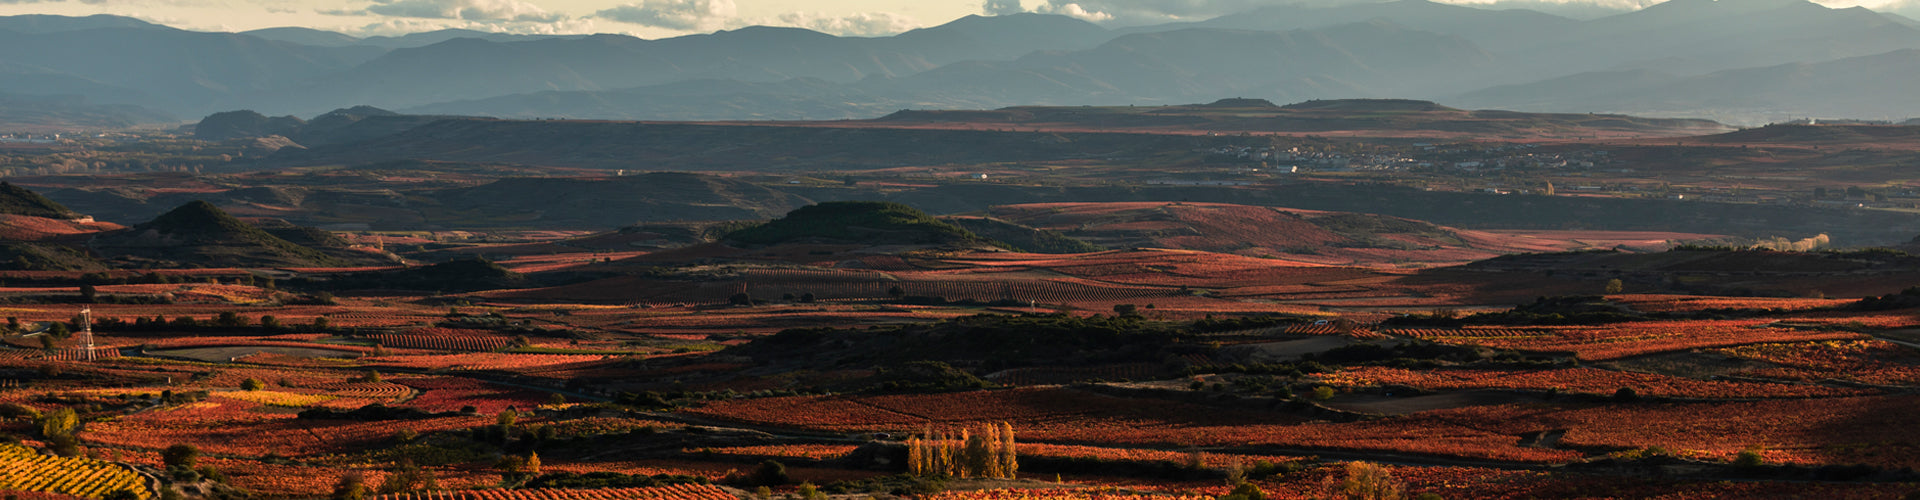 Panoramic view of the vineyards of Laguardia in Rioja Alavesa Spain